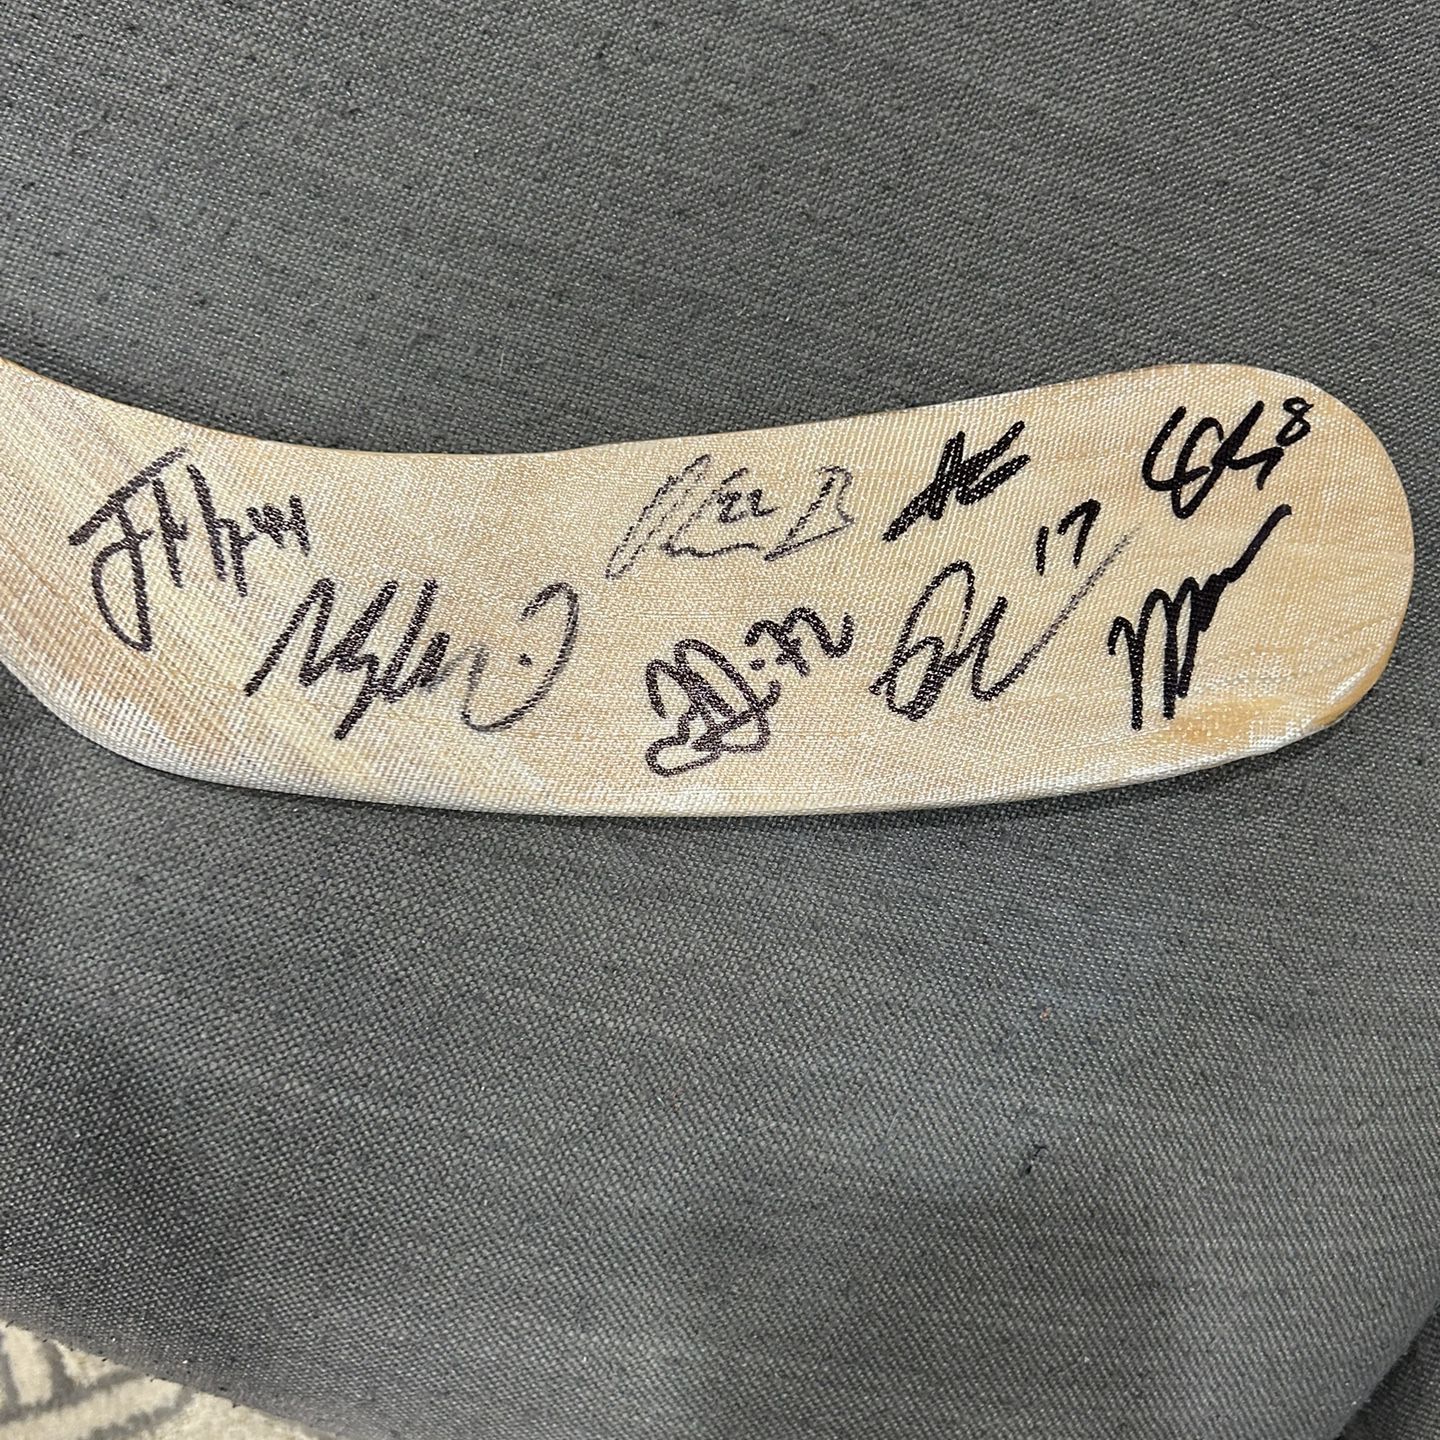 Seattle Kraken Inaugural Season Team Signed Autographed White